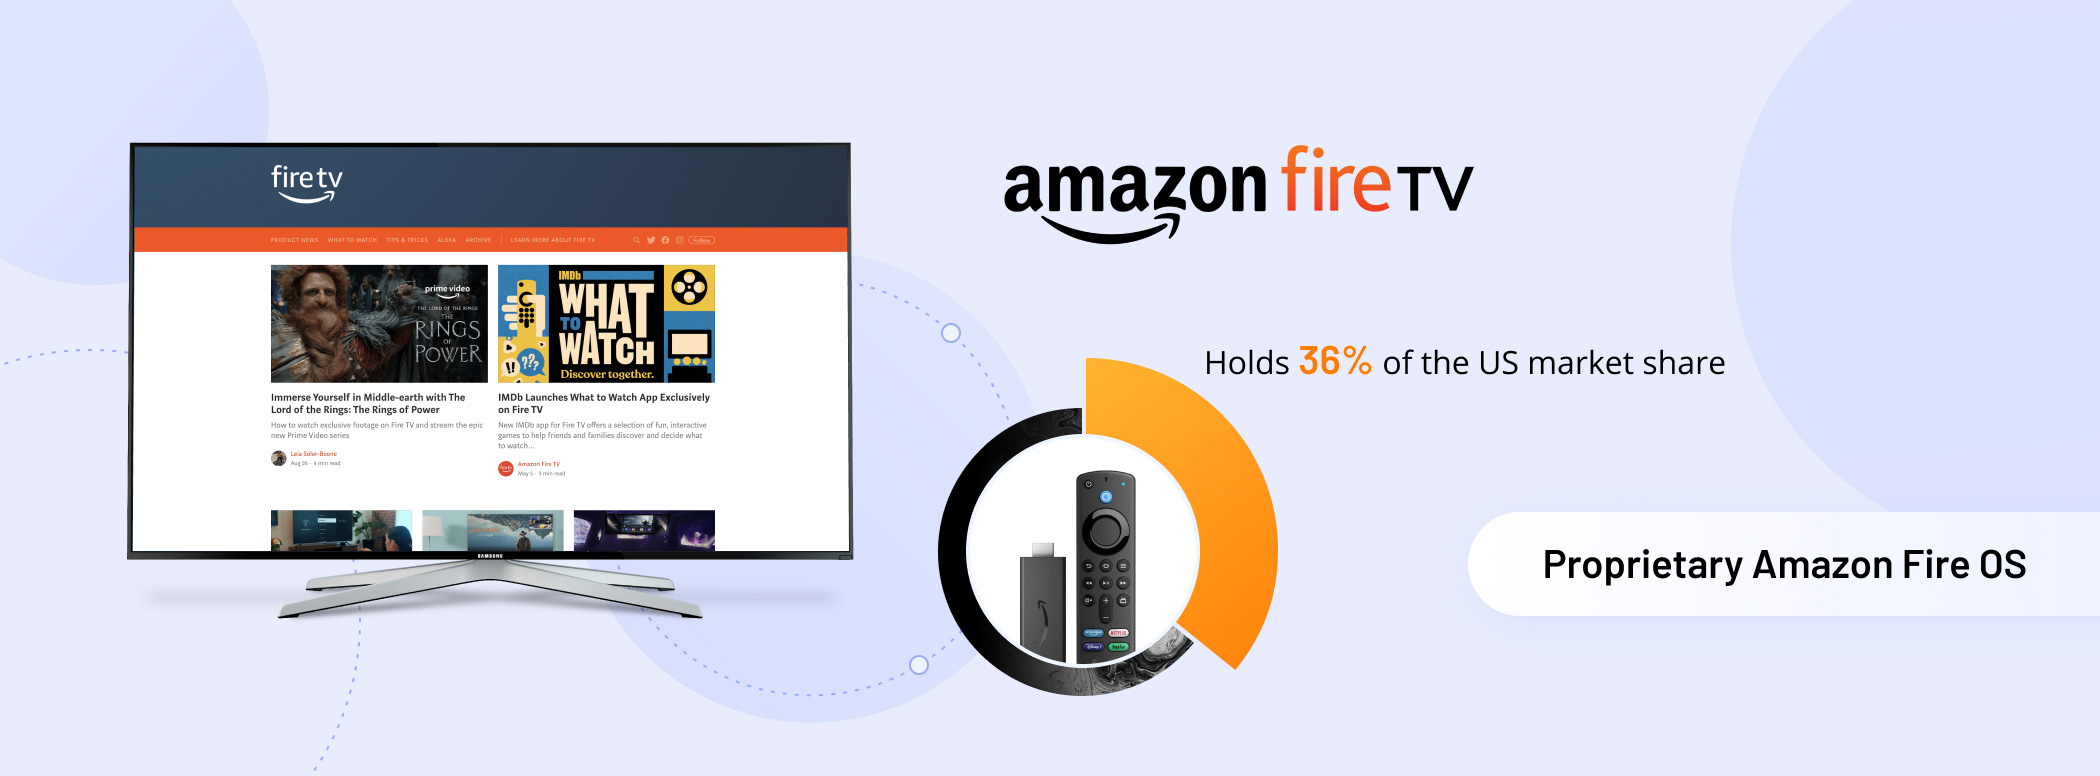 Amazon Fire TV- Xenoss blog